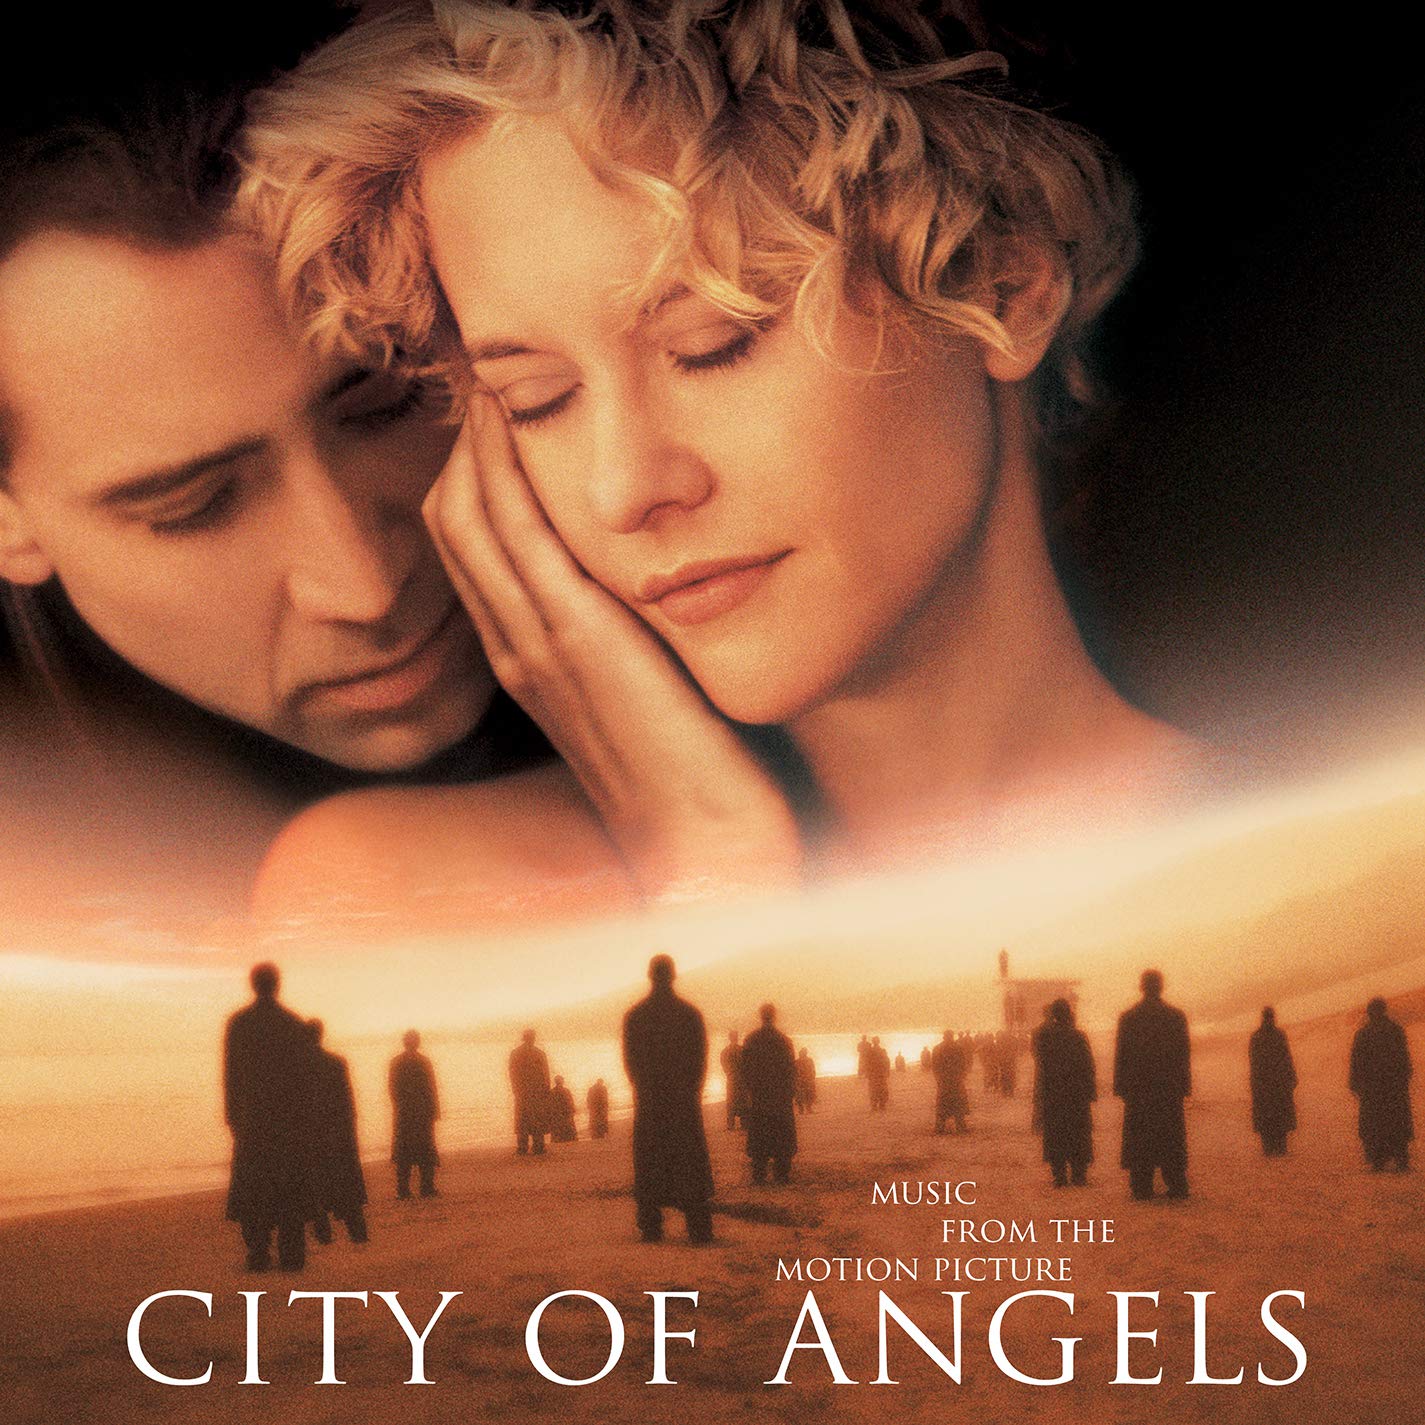 "City Of Angels" soundtrack